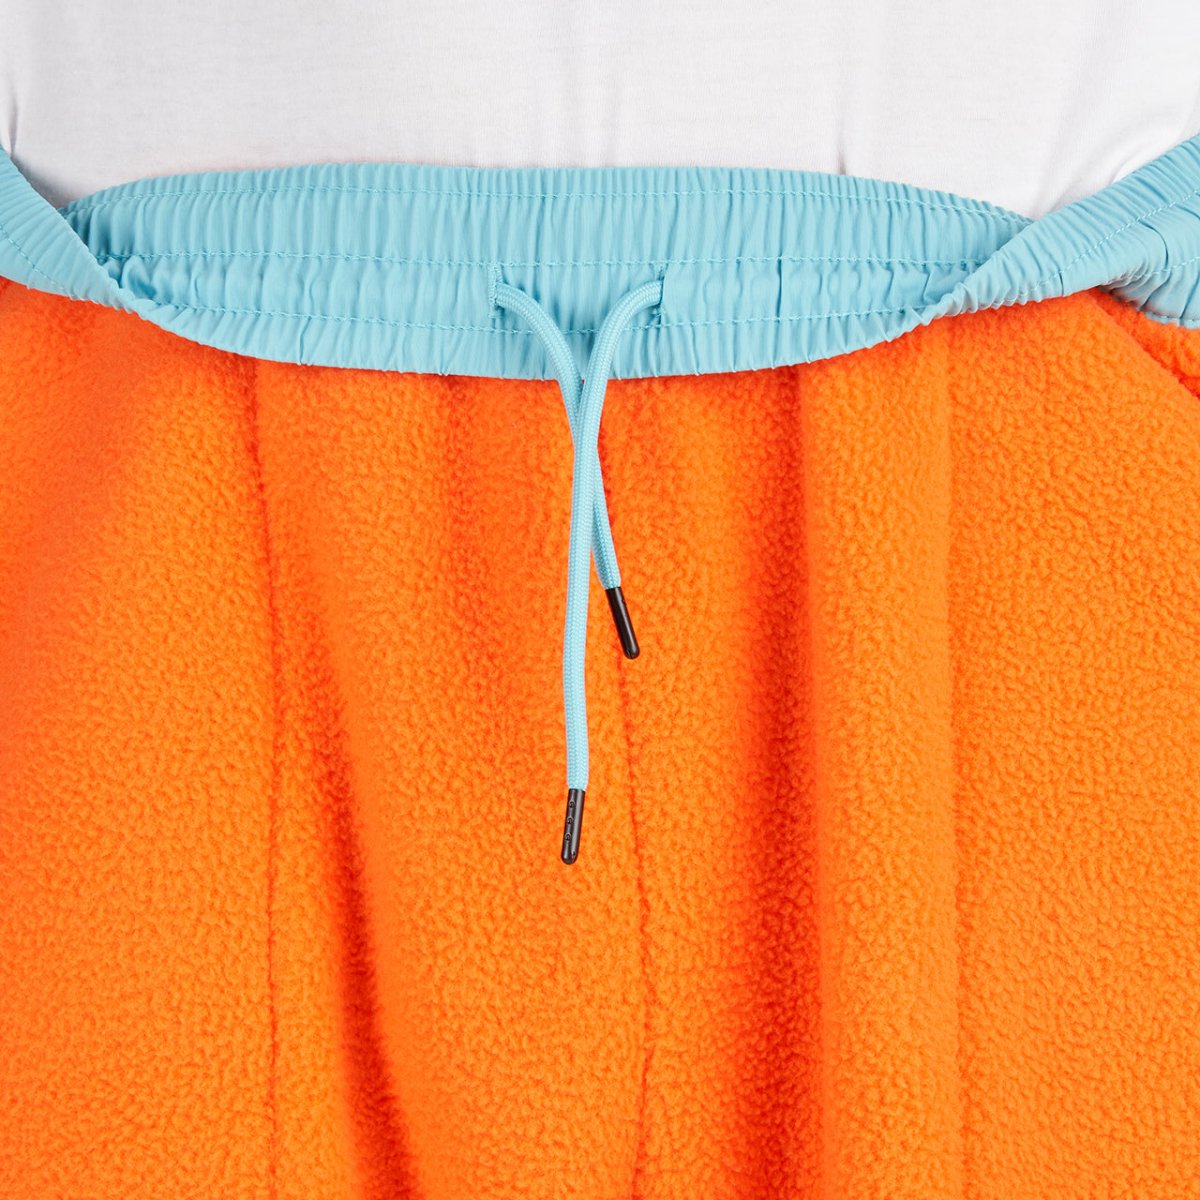 The North Face Denali Pant (Orange / Blau)  - Allike Store